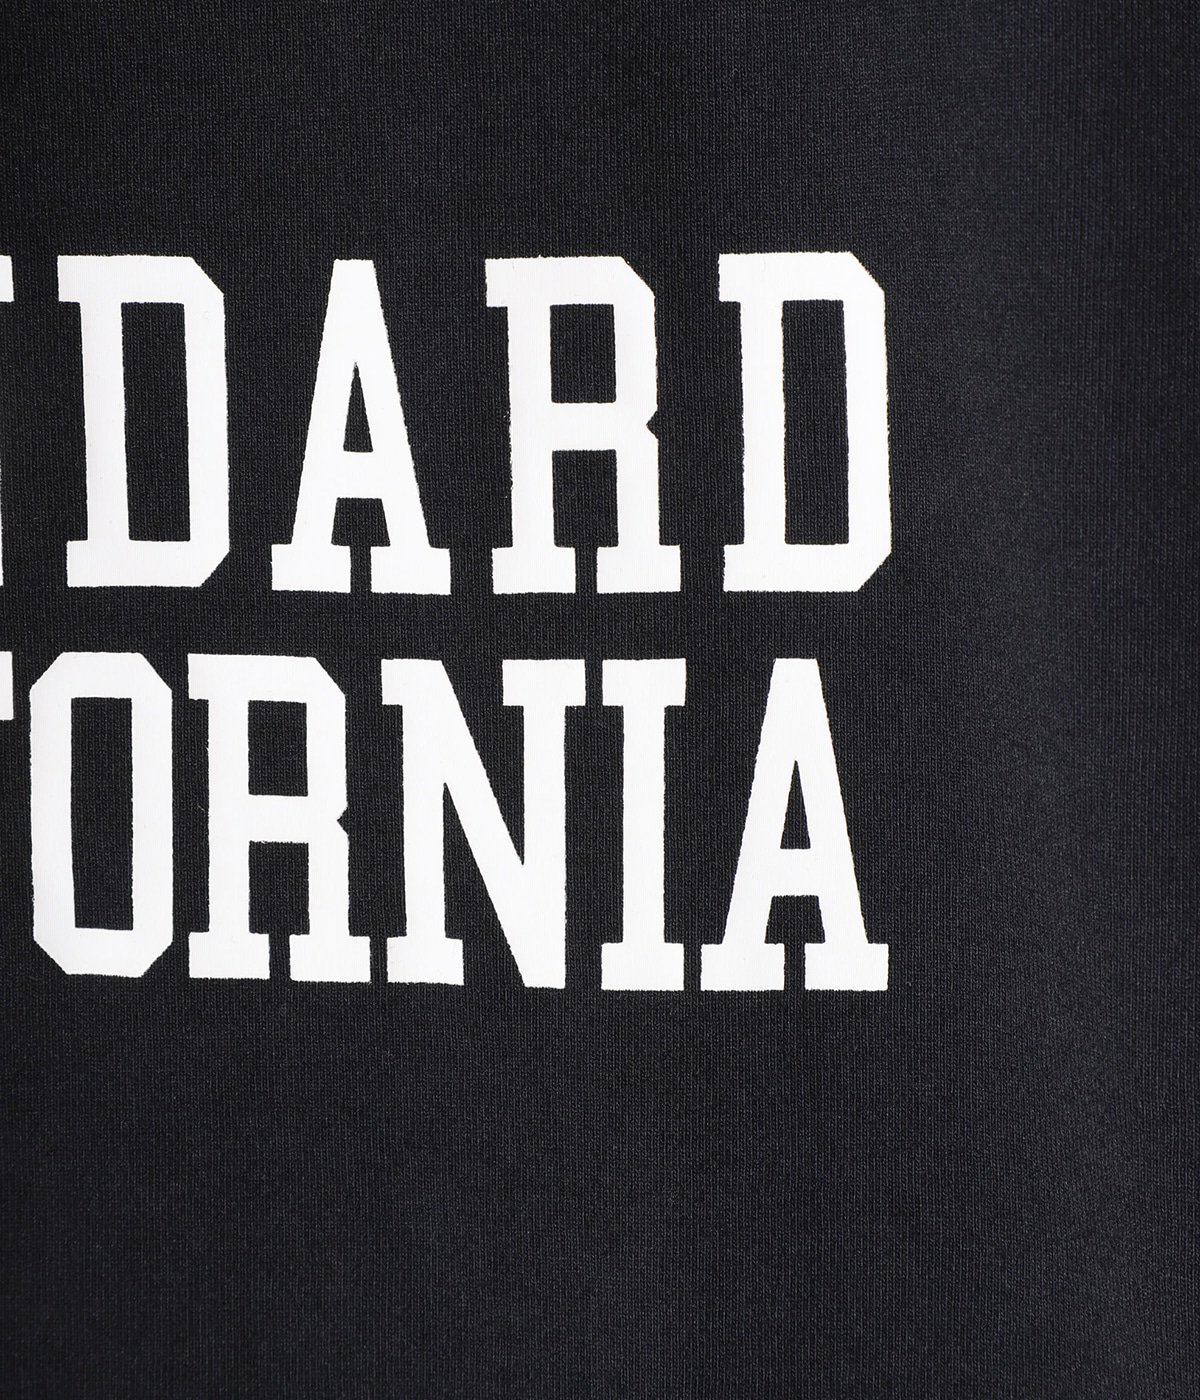 SD Tech Dry Logo T | STANDARD CALIFORNIA(スタンダード 